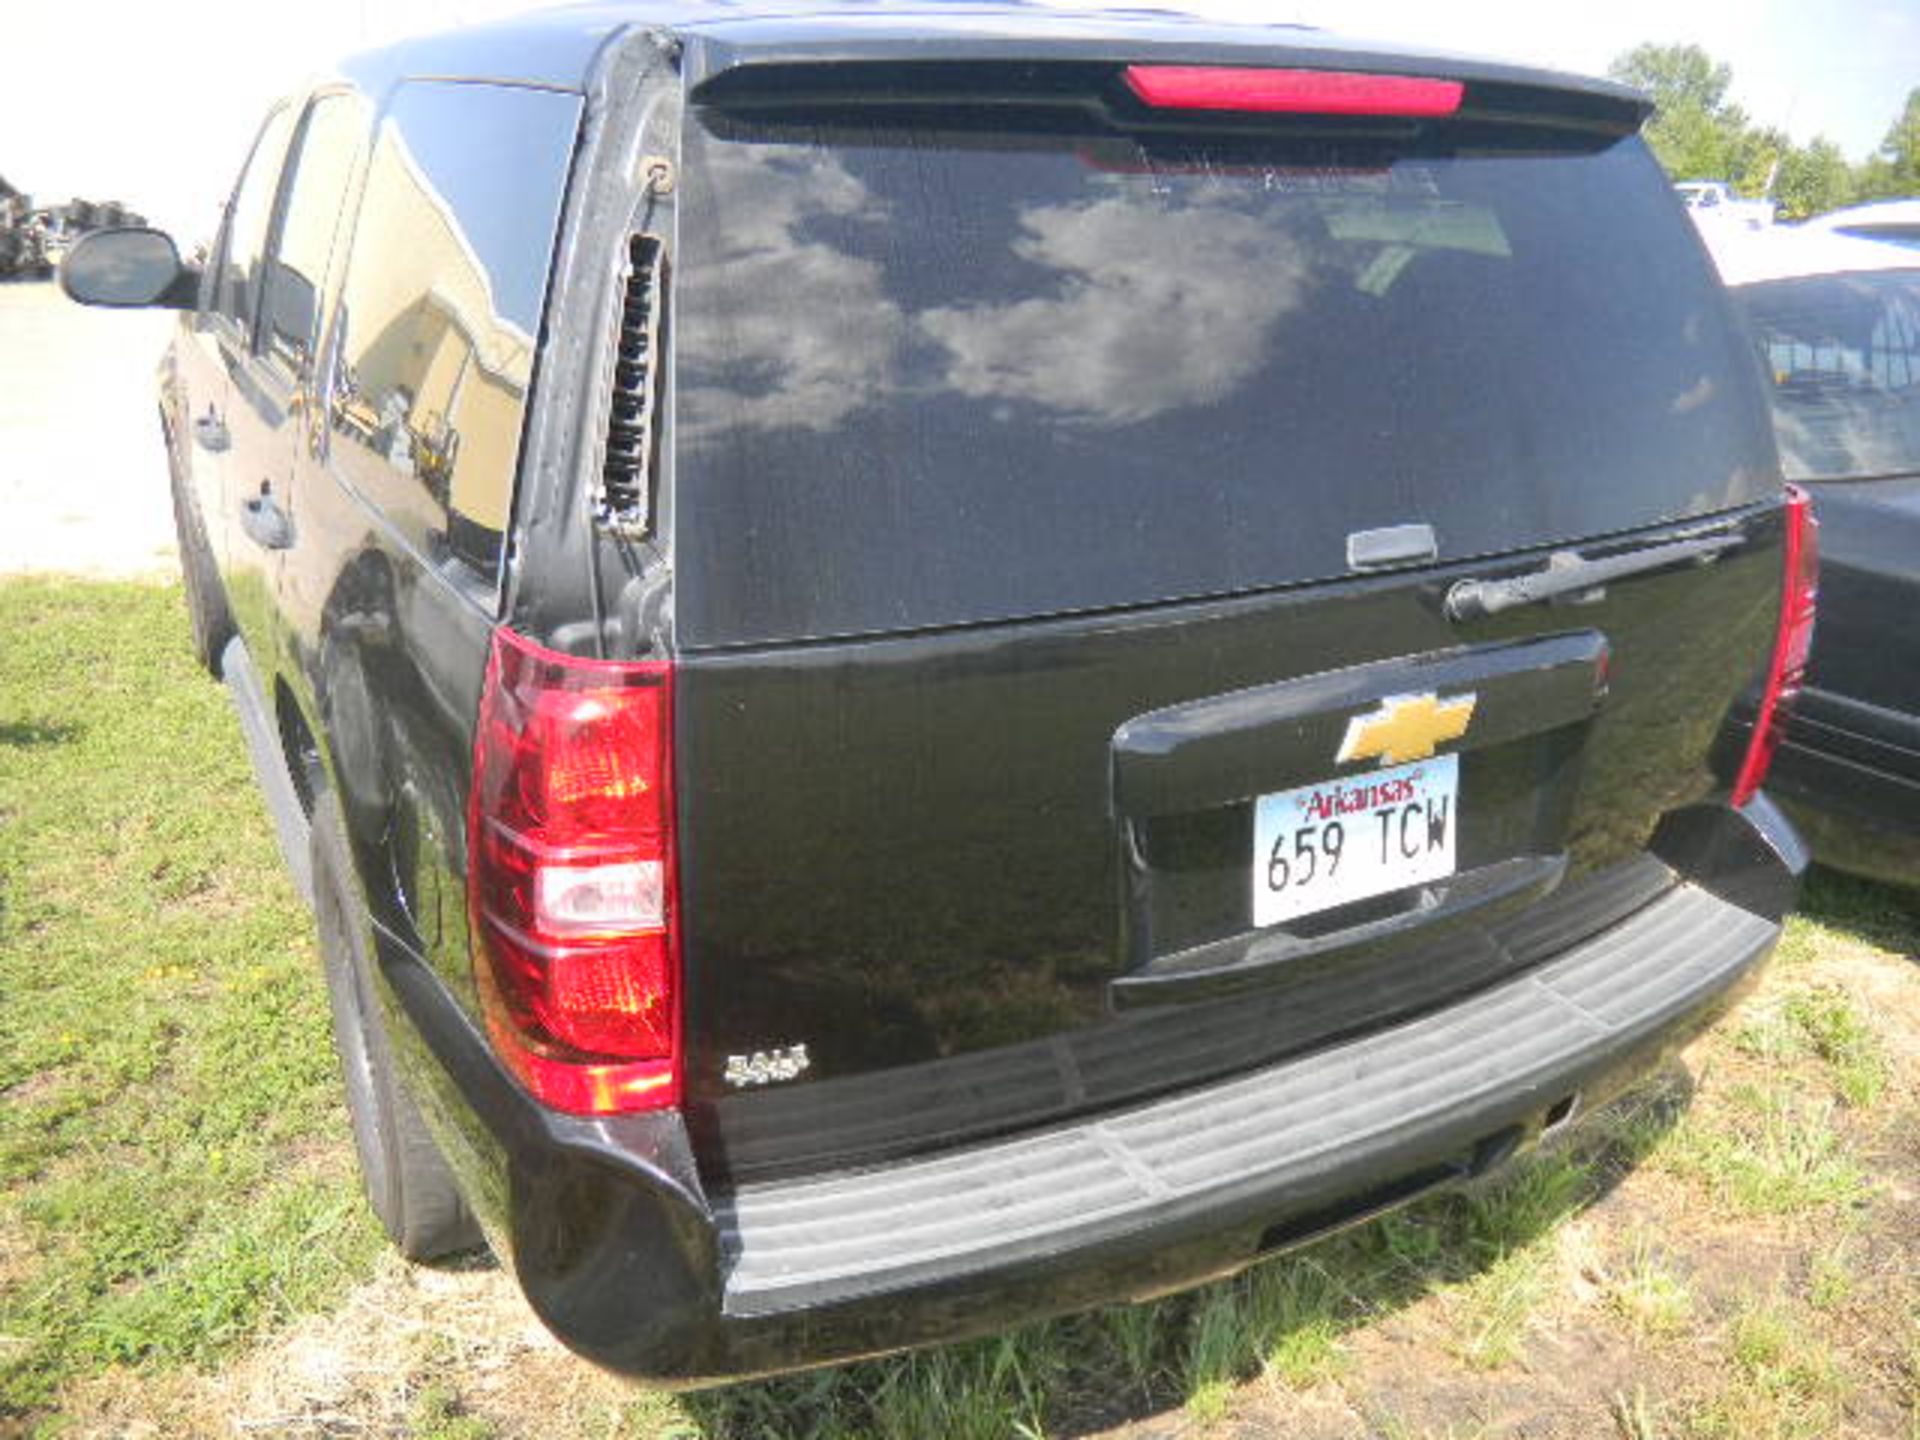 2013 Chevrolet Tahoe SUV Patrol Car - Asset I.D. #899 - Last of Vin (284825) - Image 3 of 7